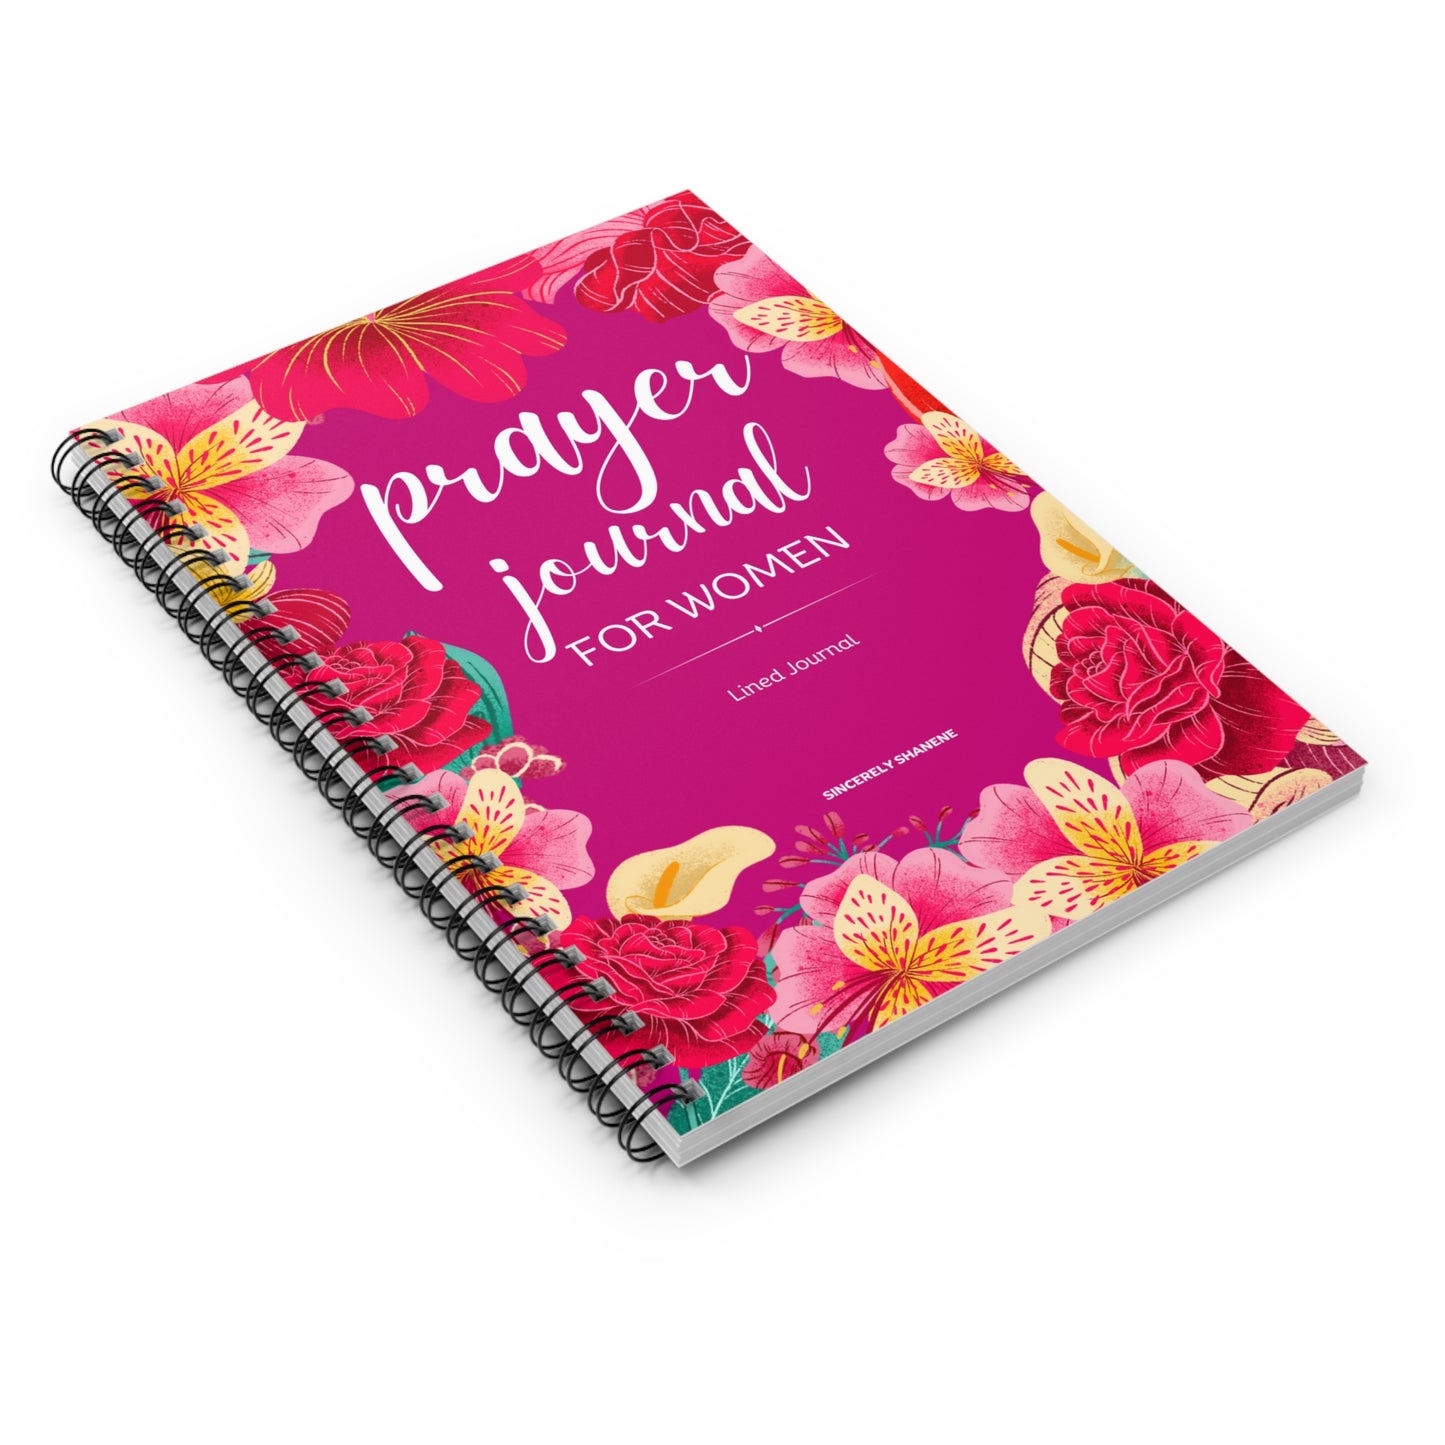 Prayer Journal for Women: Spiral Lined Companion Notebook